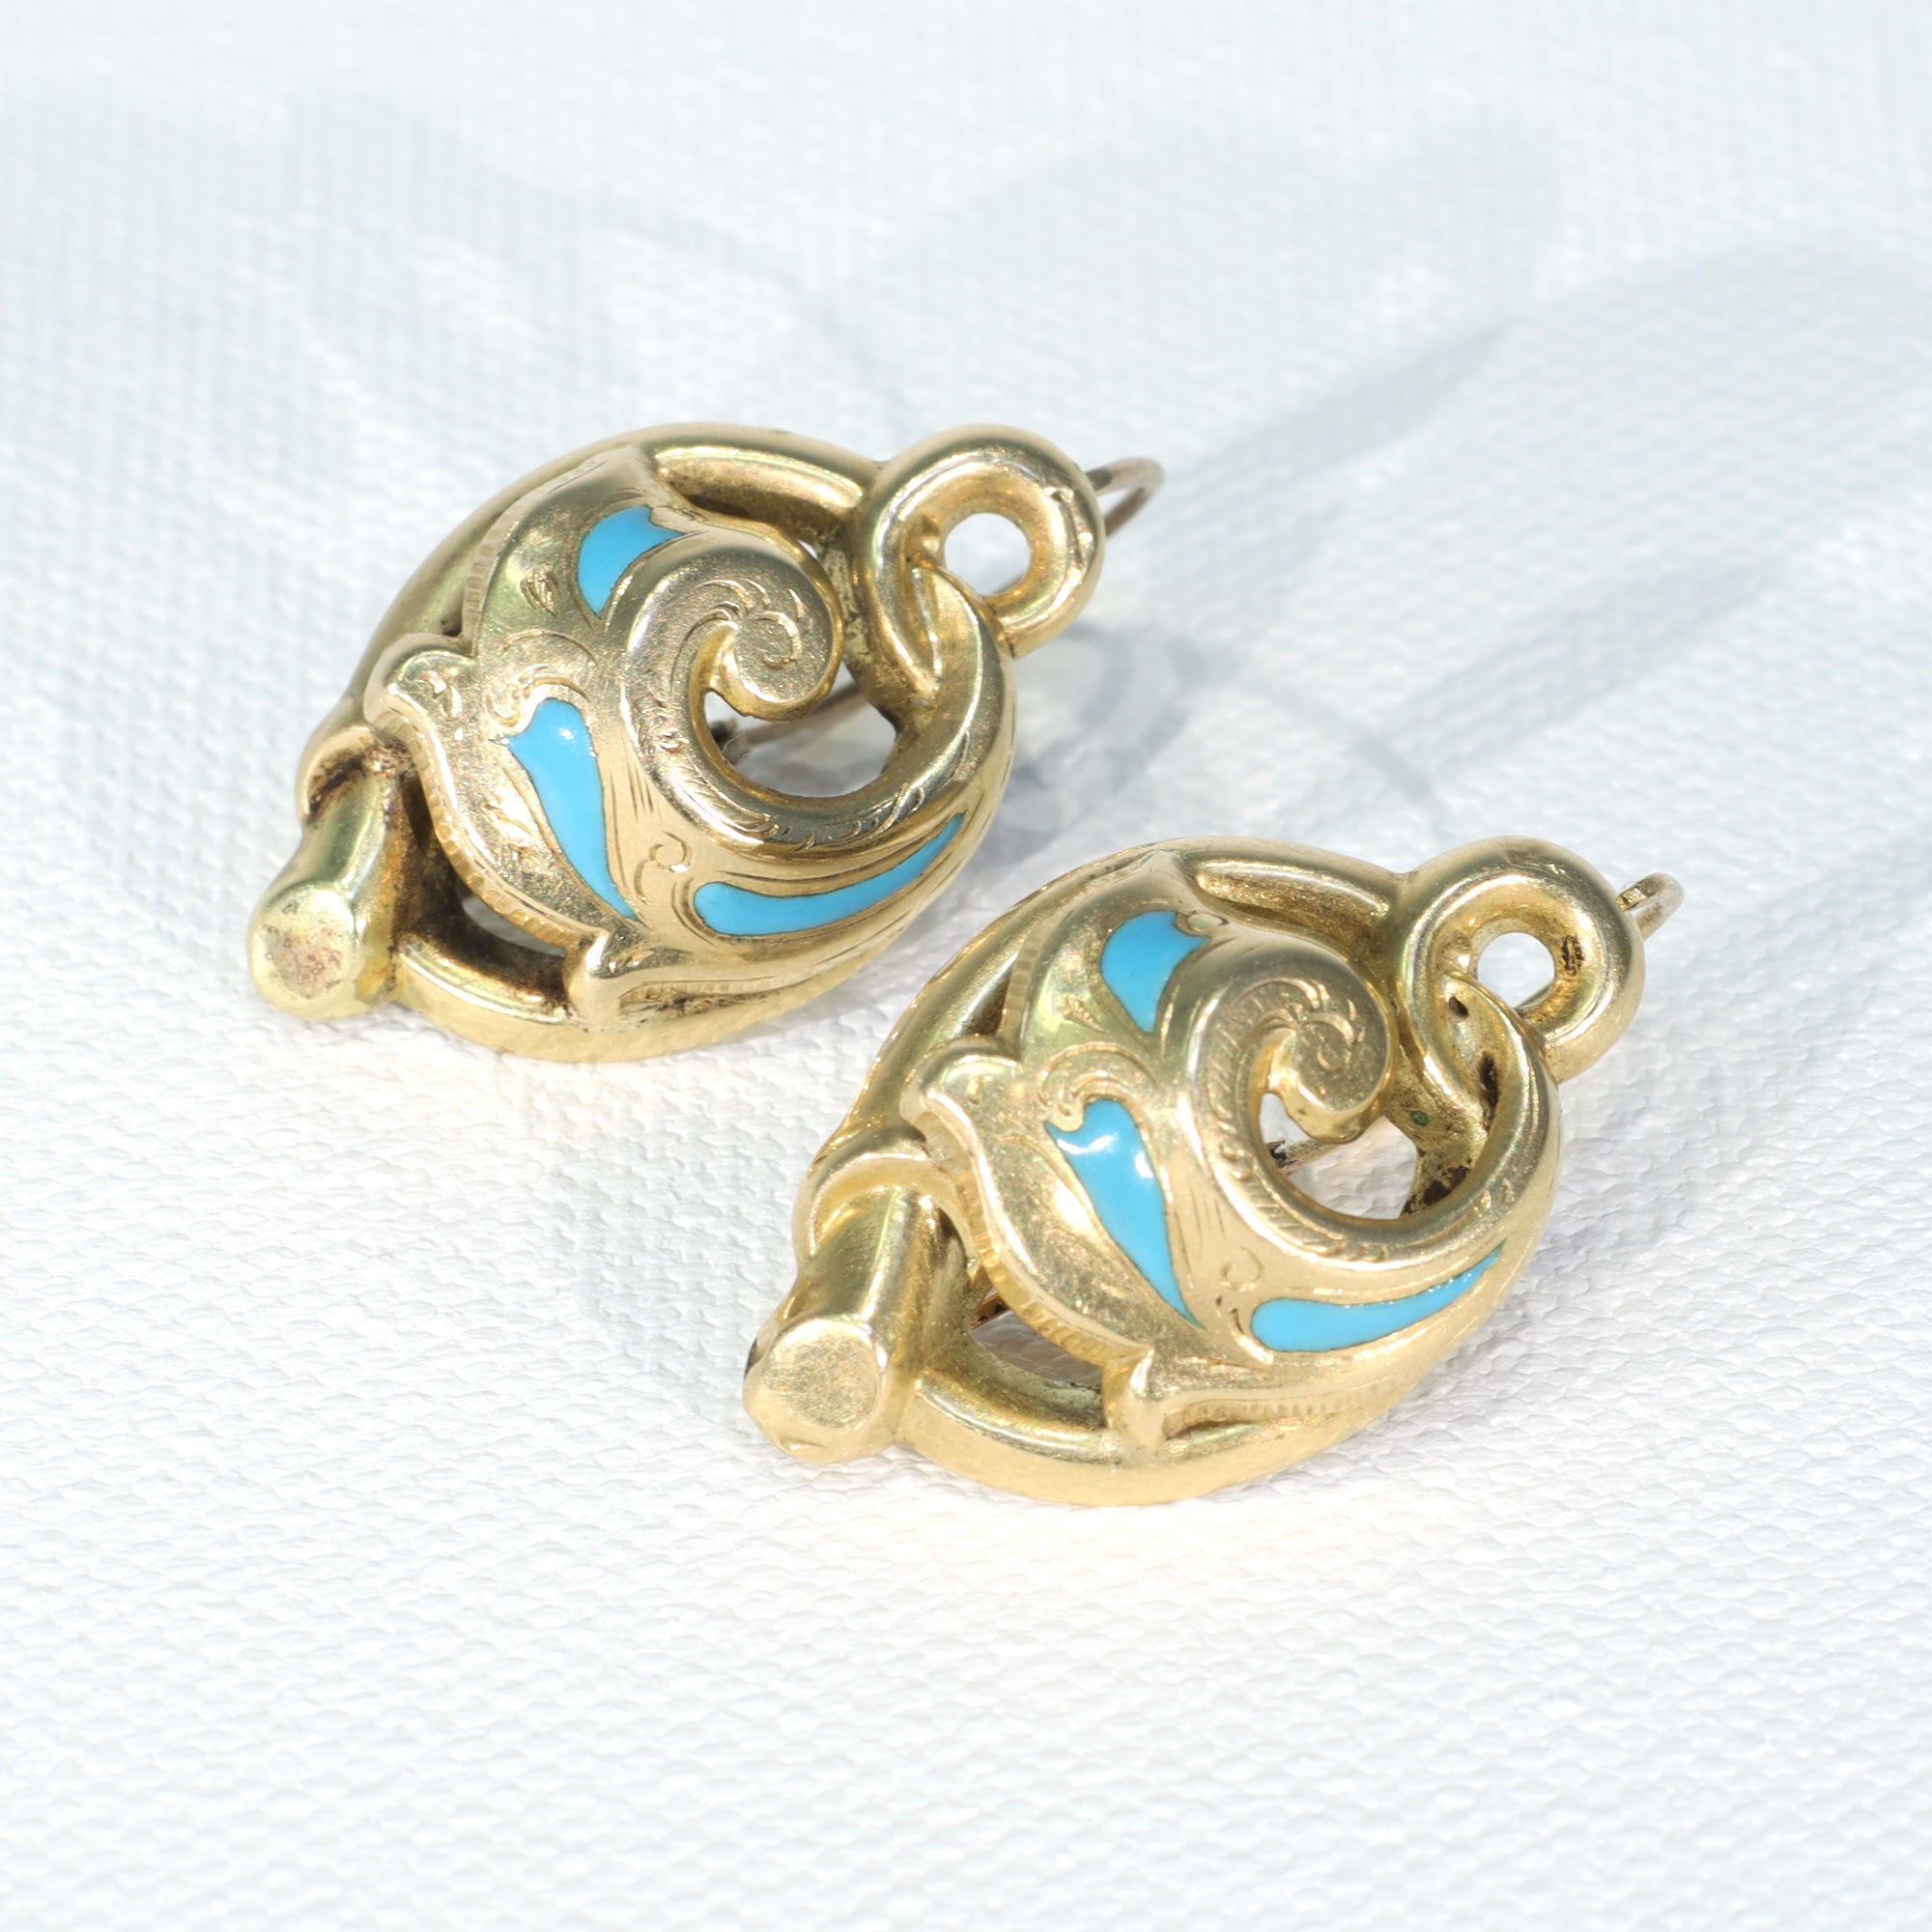 Antique Neoclassical French 18k Gold Blue Enamel Earrings c. 1820